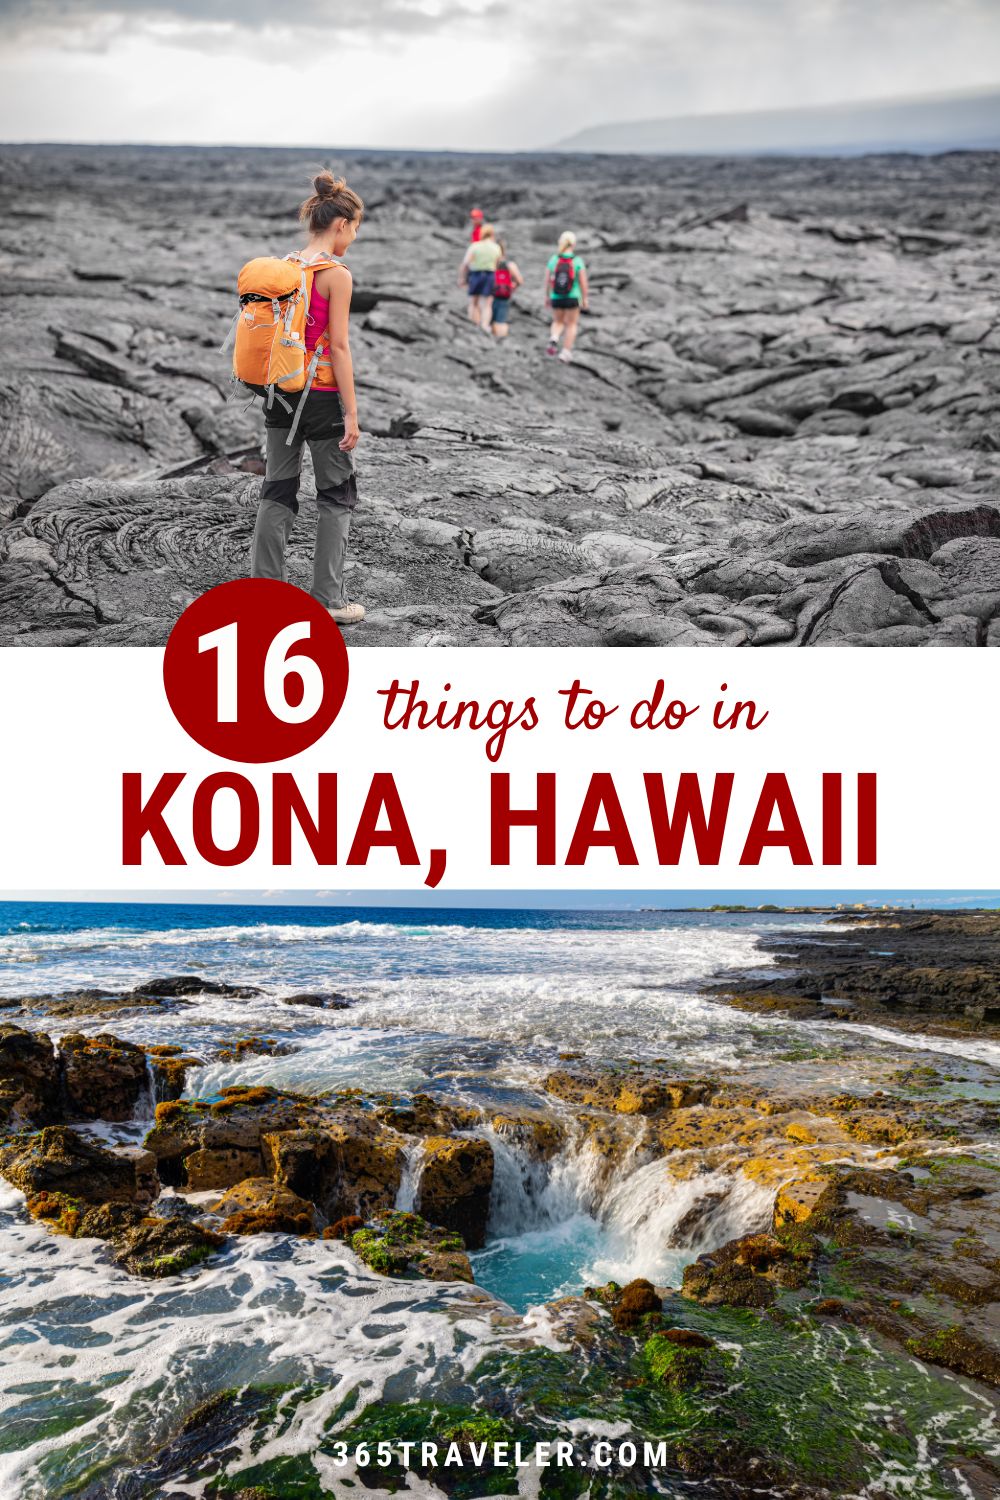 16 THINGS TO DO IN KONA HAWAII (AND THE KOHALA COAST)